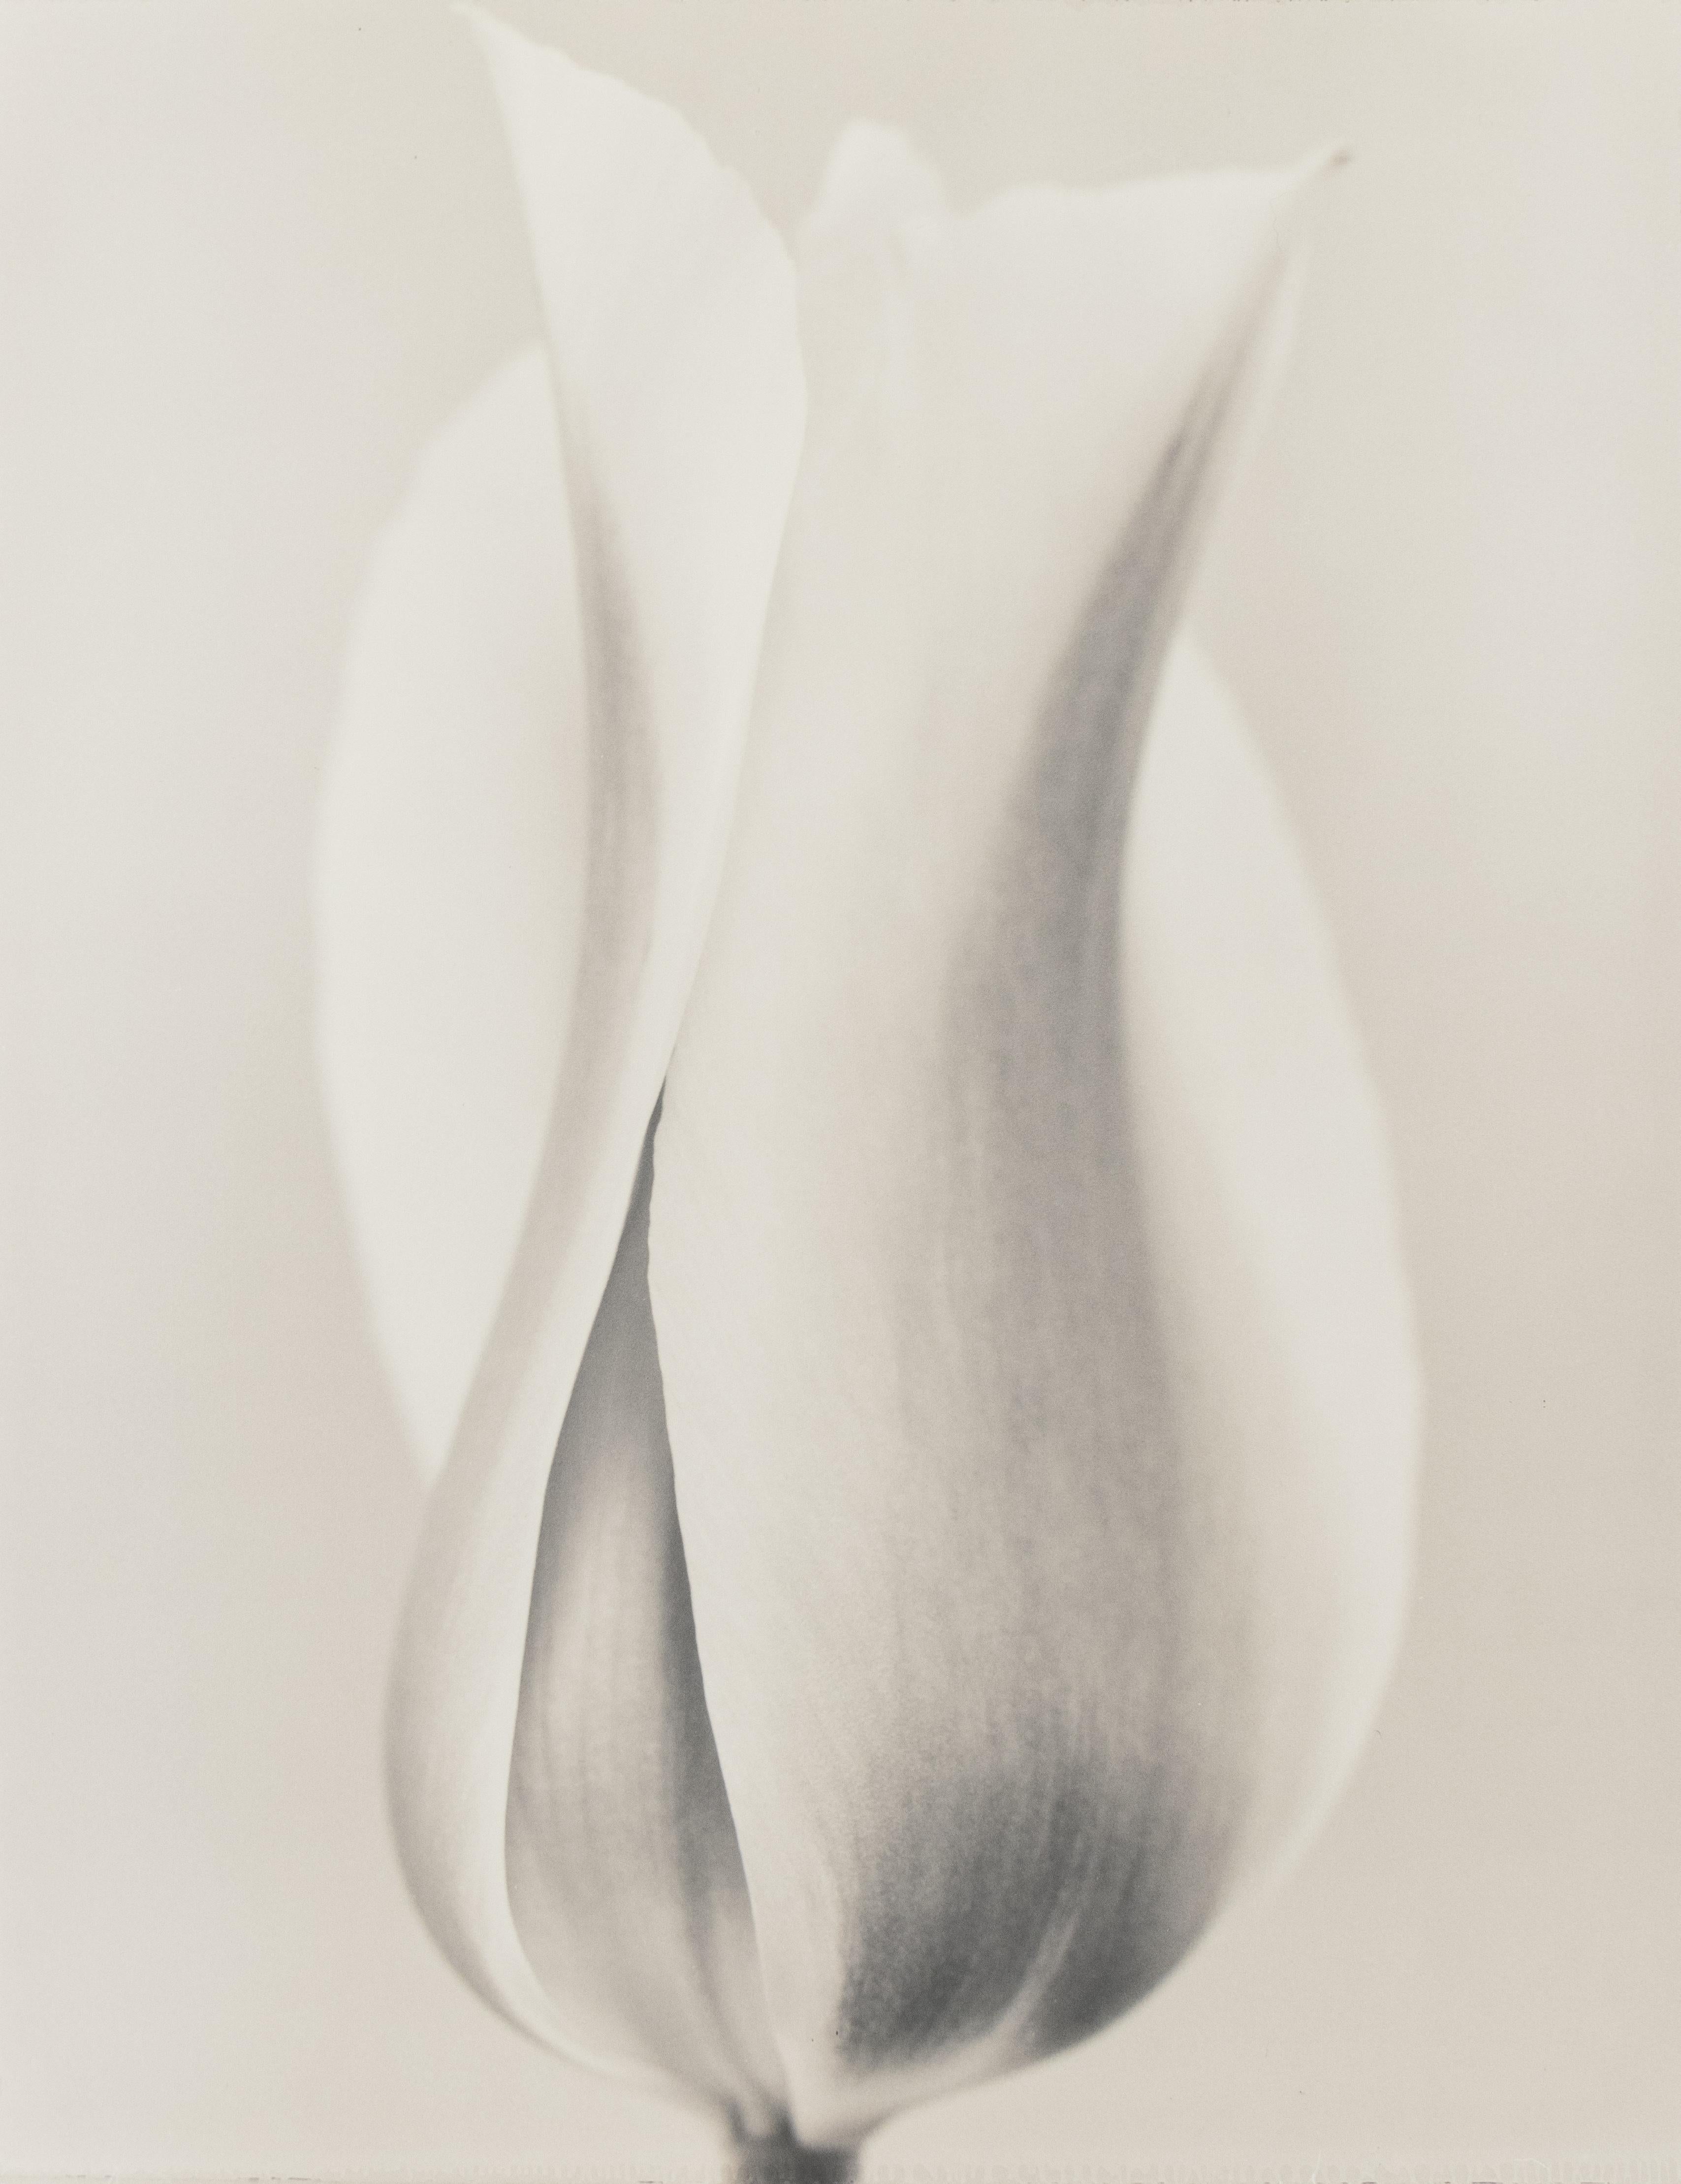 Tulipa „Blushing Beauty“ II – Photograph von Ron van Dongen